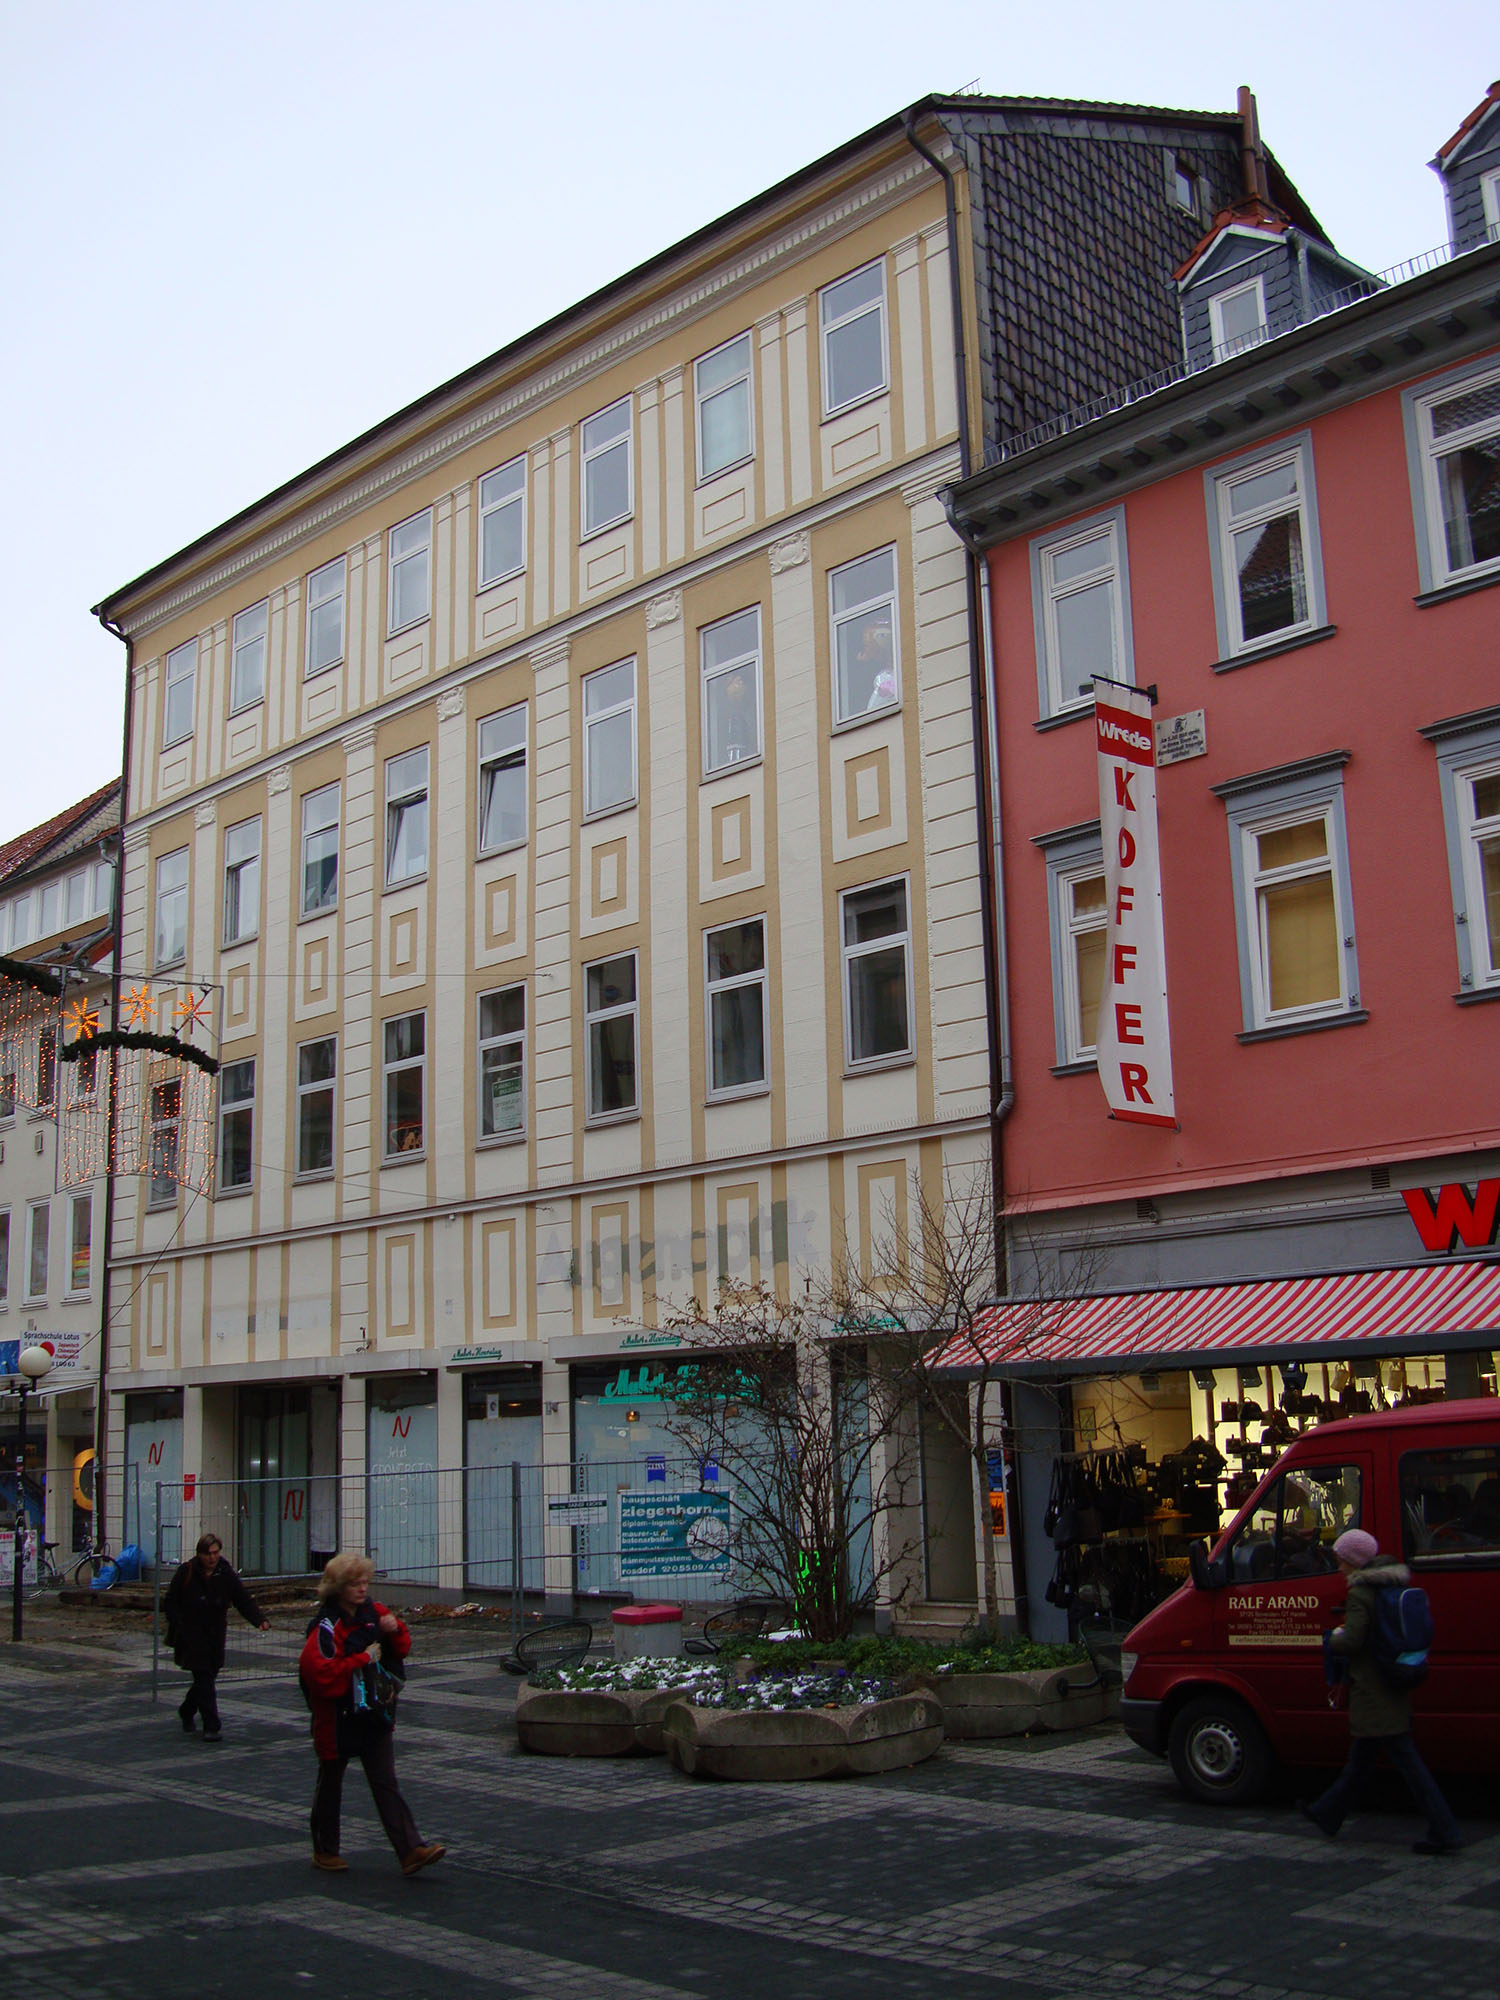 Remodelling/Redevelopment of Residential and Commercial Building Weender Strasse 36 Göttingen